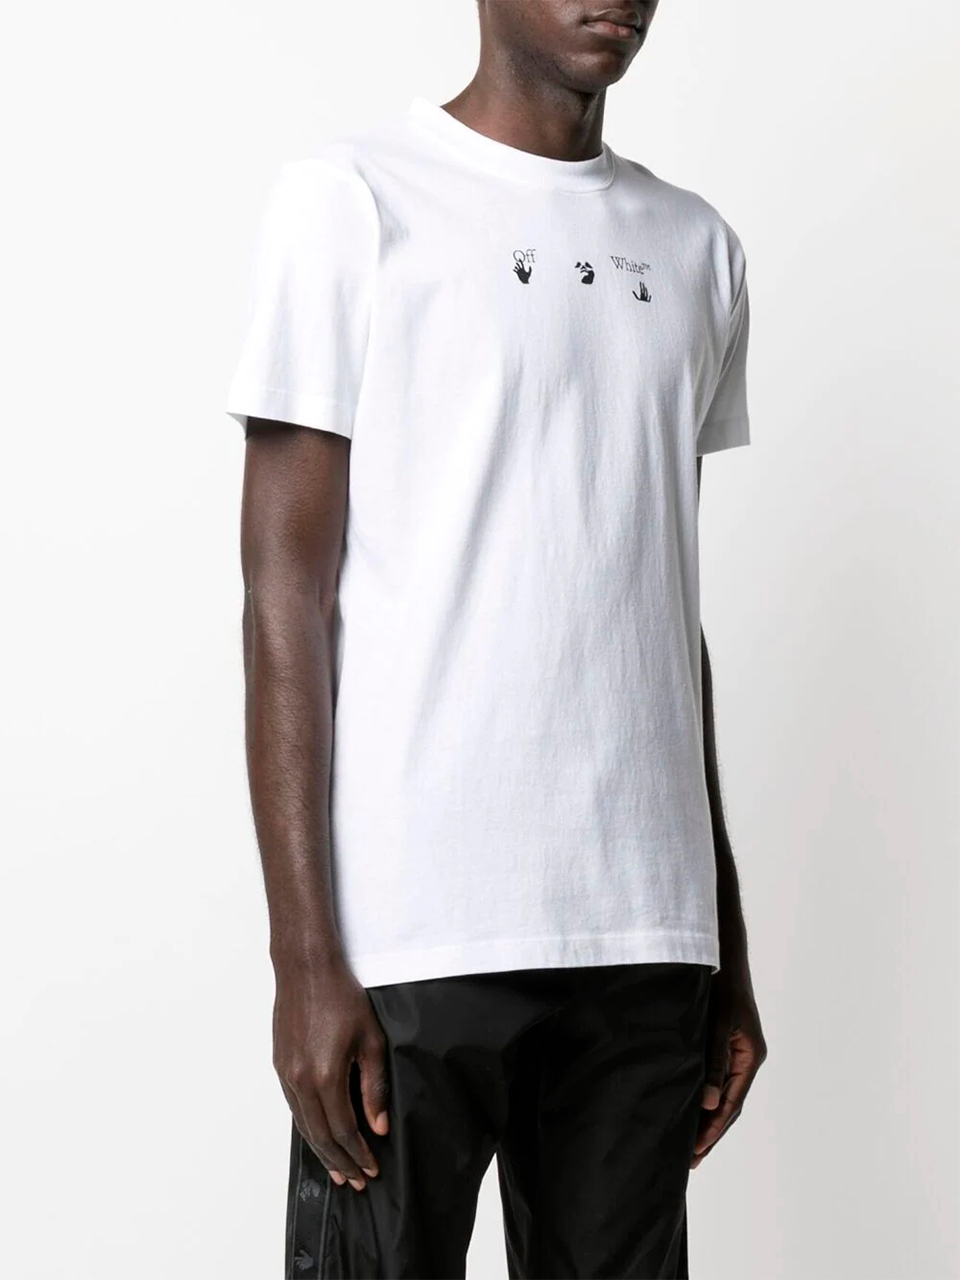 Imagem de: Camiseta Off-White Branca com Estampa Offf